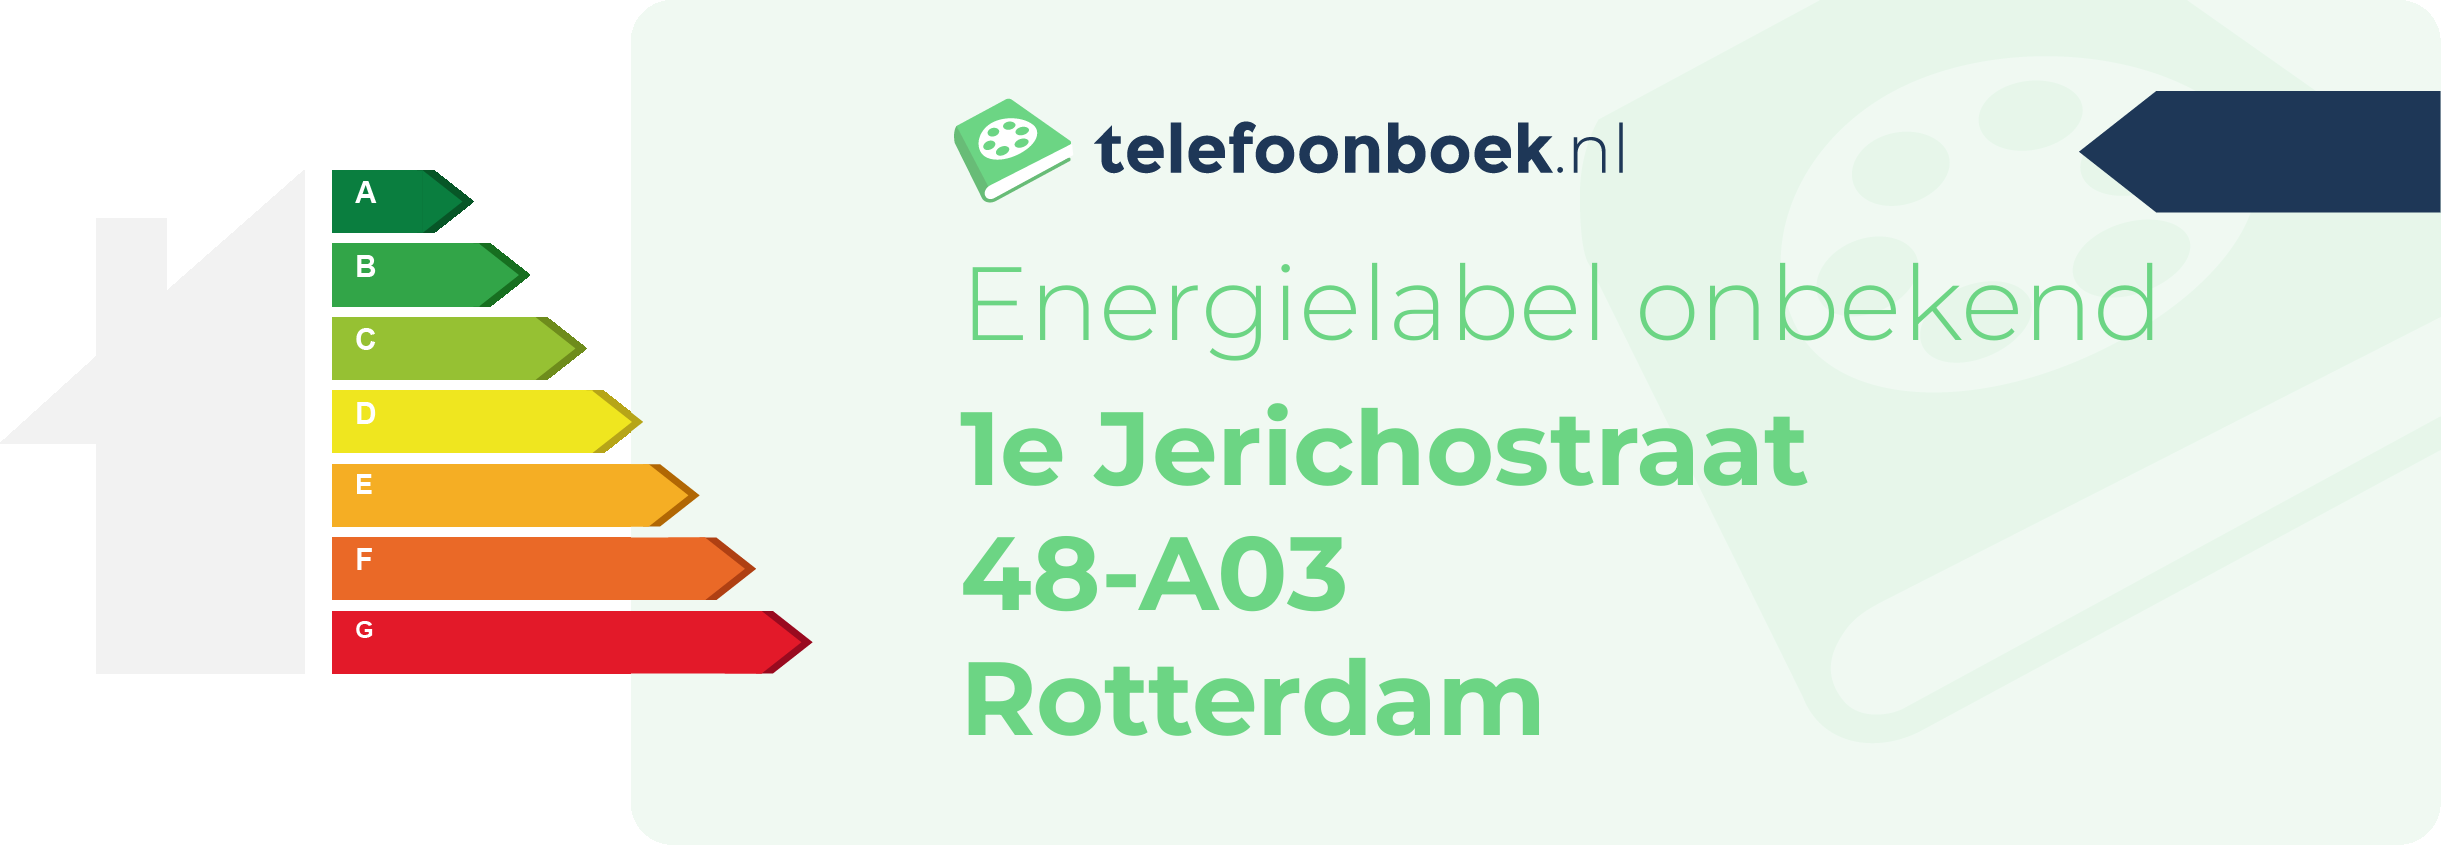 Energielabel 1e Jerichostraat 48-A03 Rotterdam